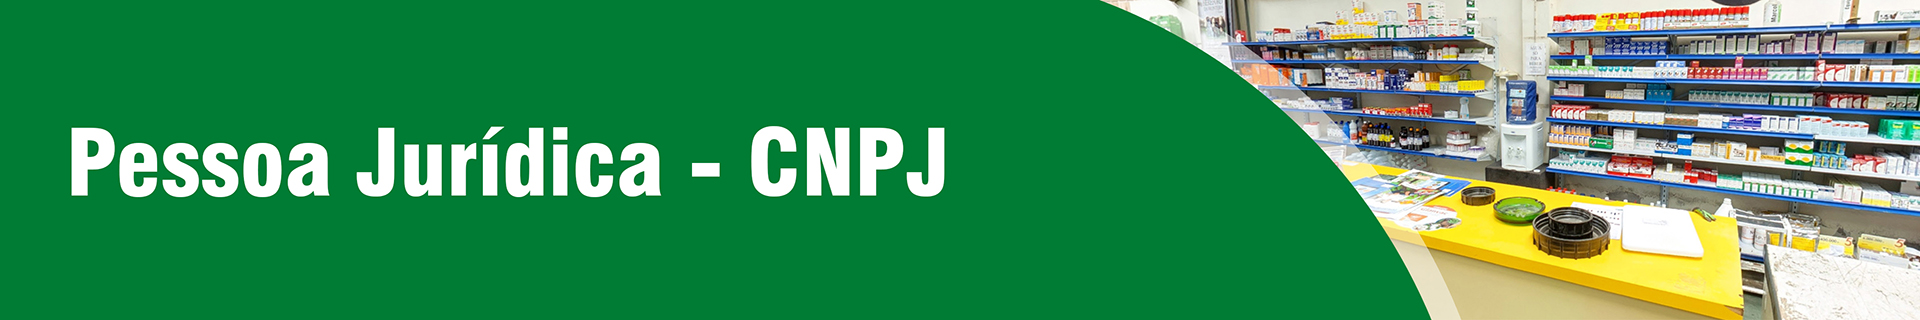 Pessoa Jurídica - CNPJ